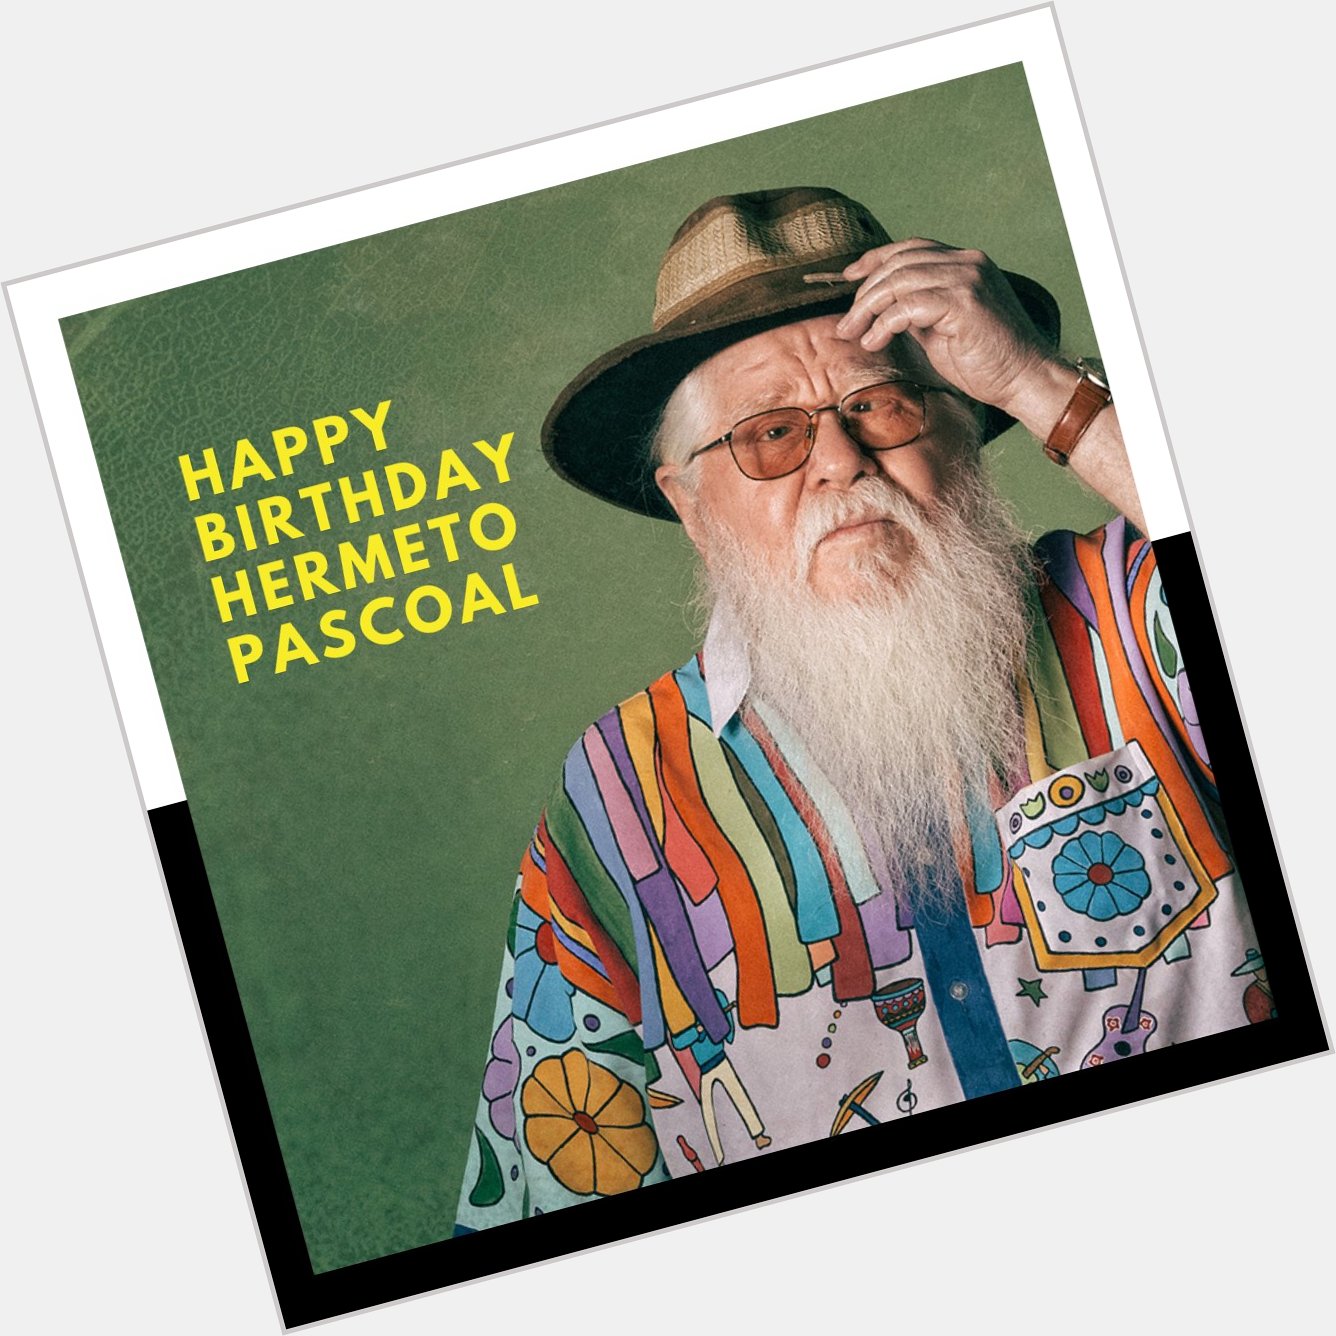 Wishing Brazilian Composer Hermeto Pascoal a very Happy Birthday! 